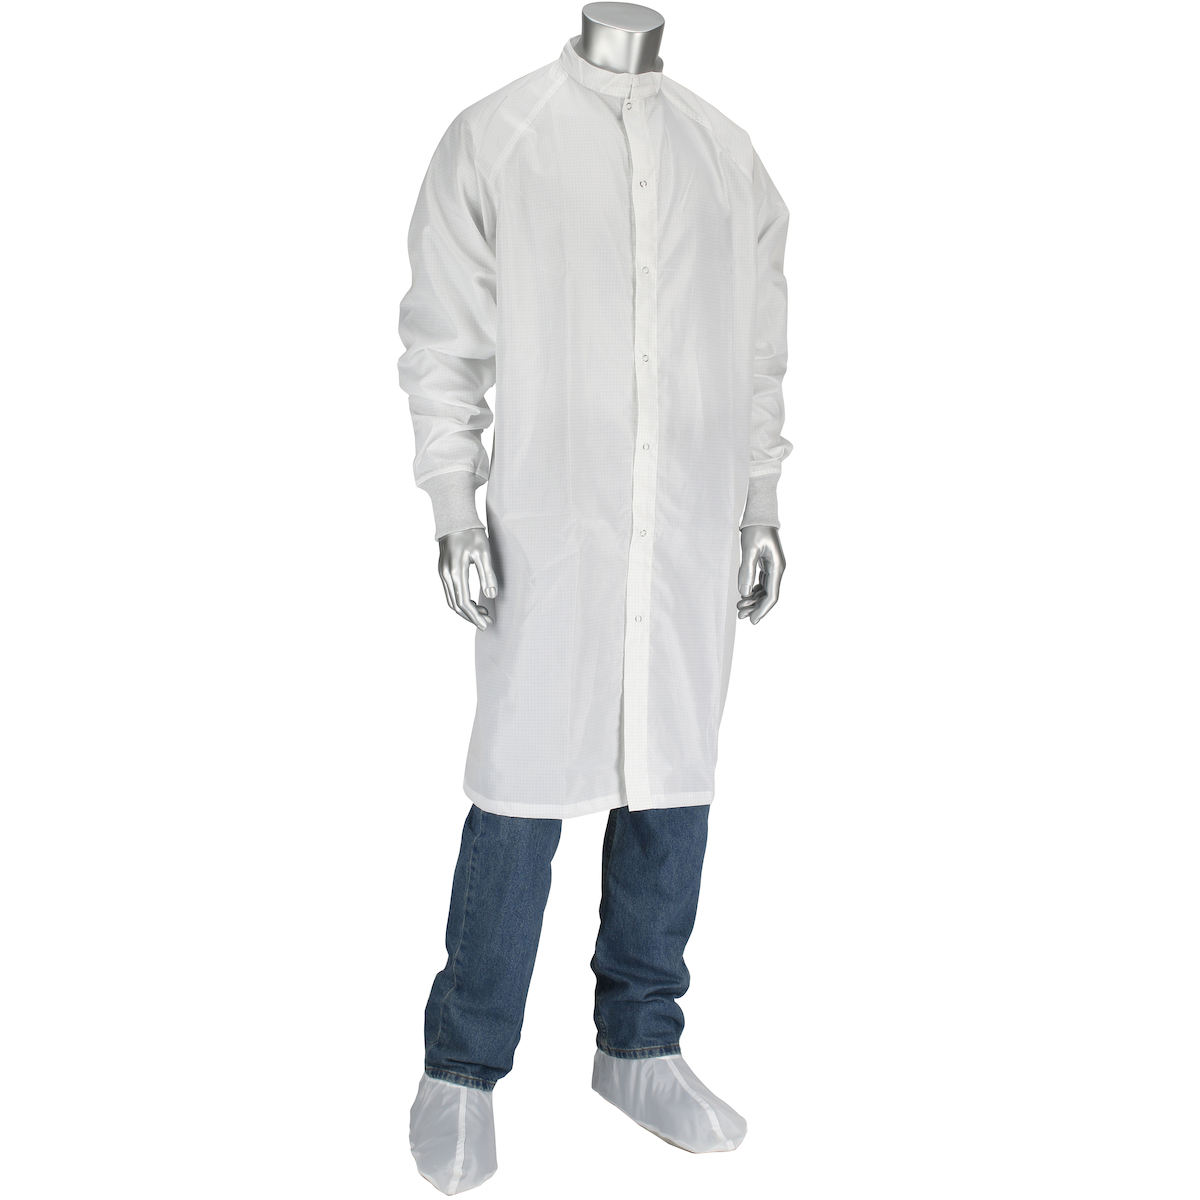 CFRZC-74-5PK  Uniform Technology™ Altessa Grid ISO 5 (Class 100) Cleanroom Frocks - white